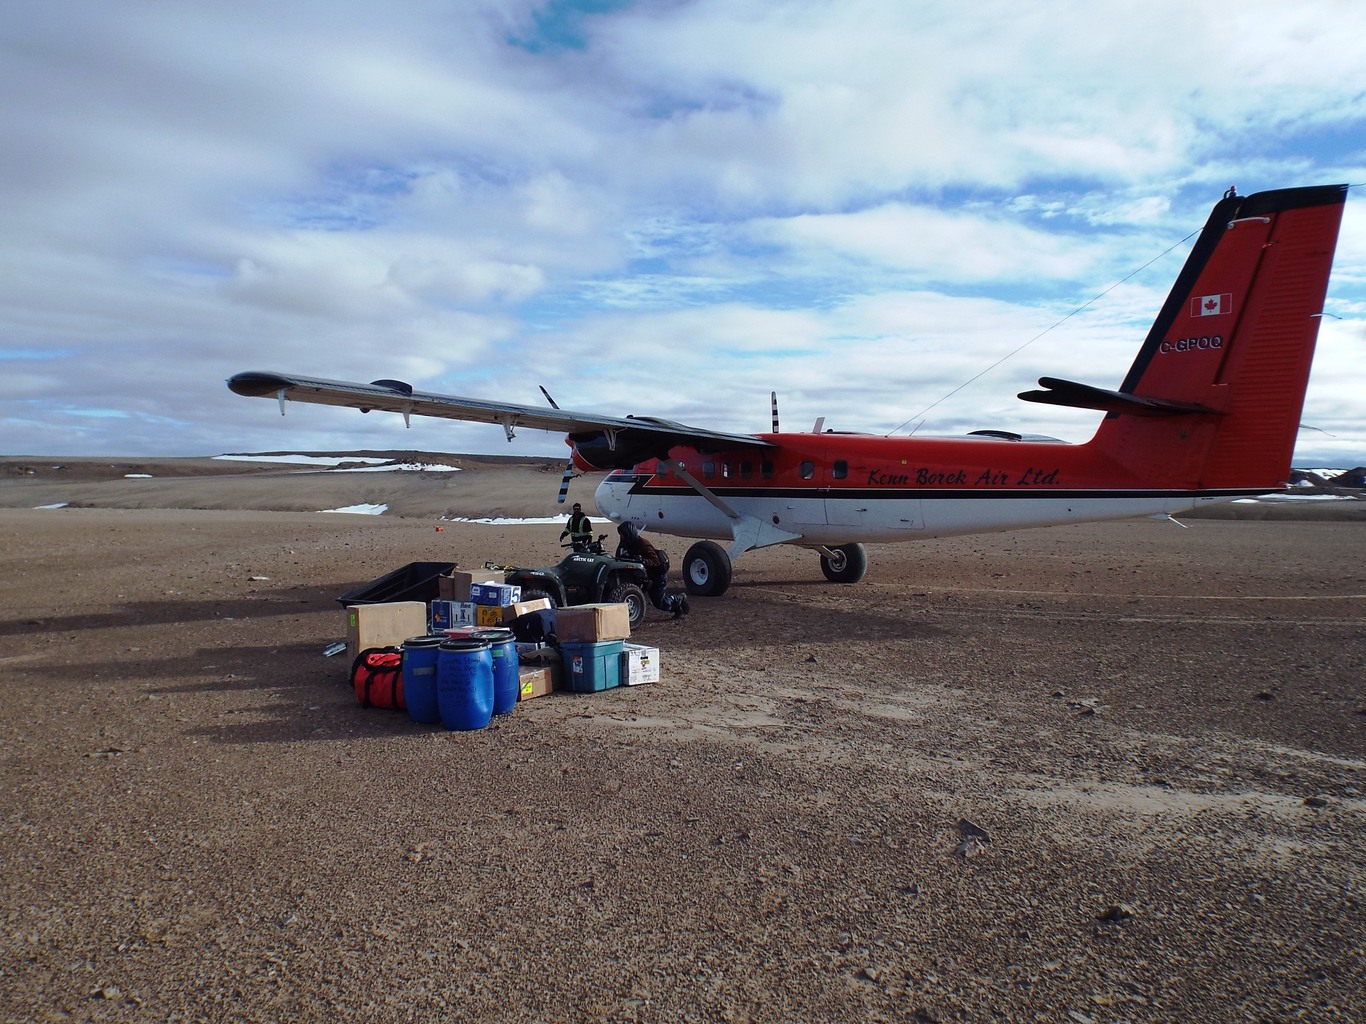 Unloading gear from the aircraft. (Jonathan Clarke)